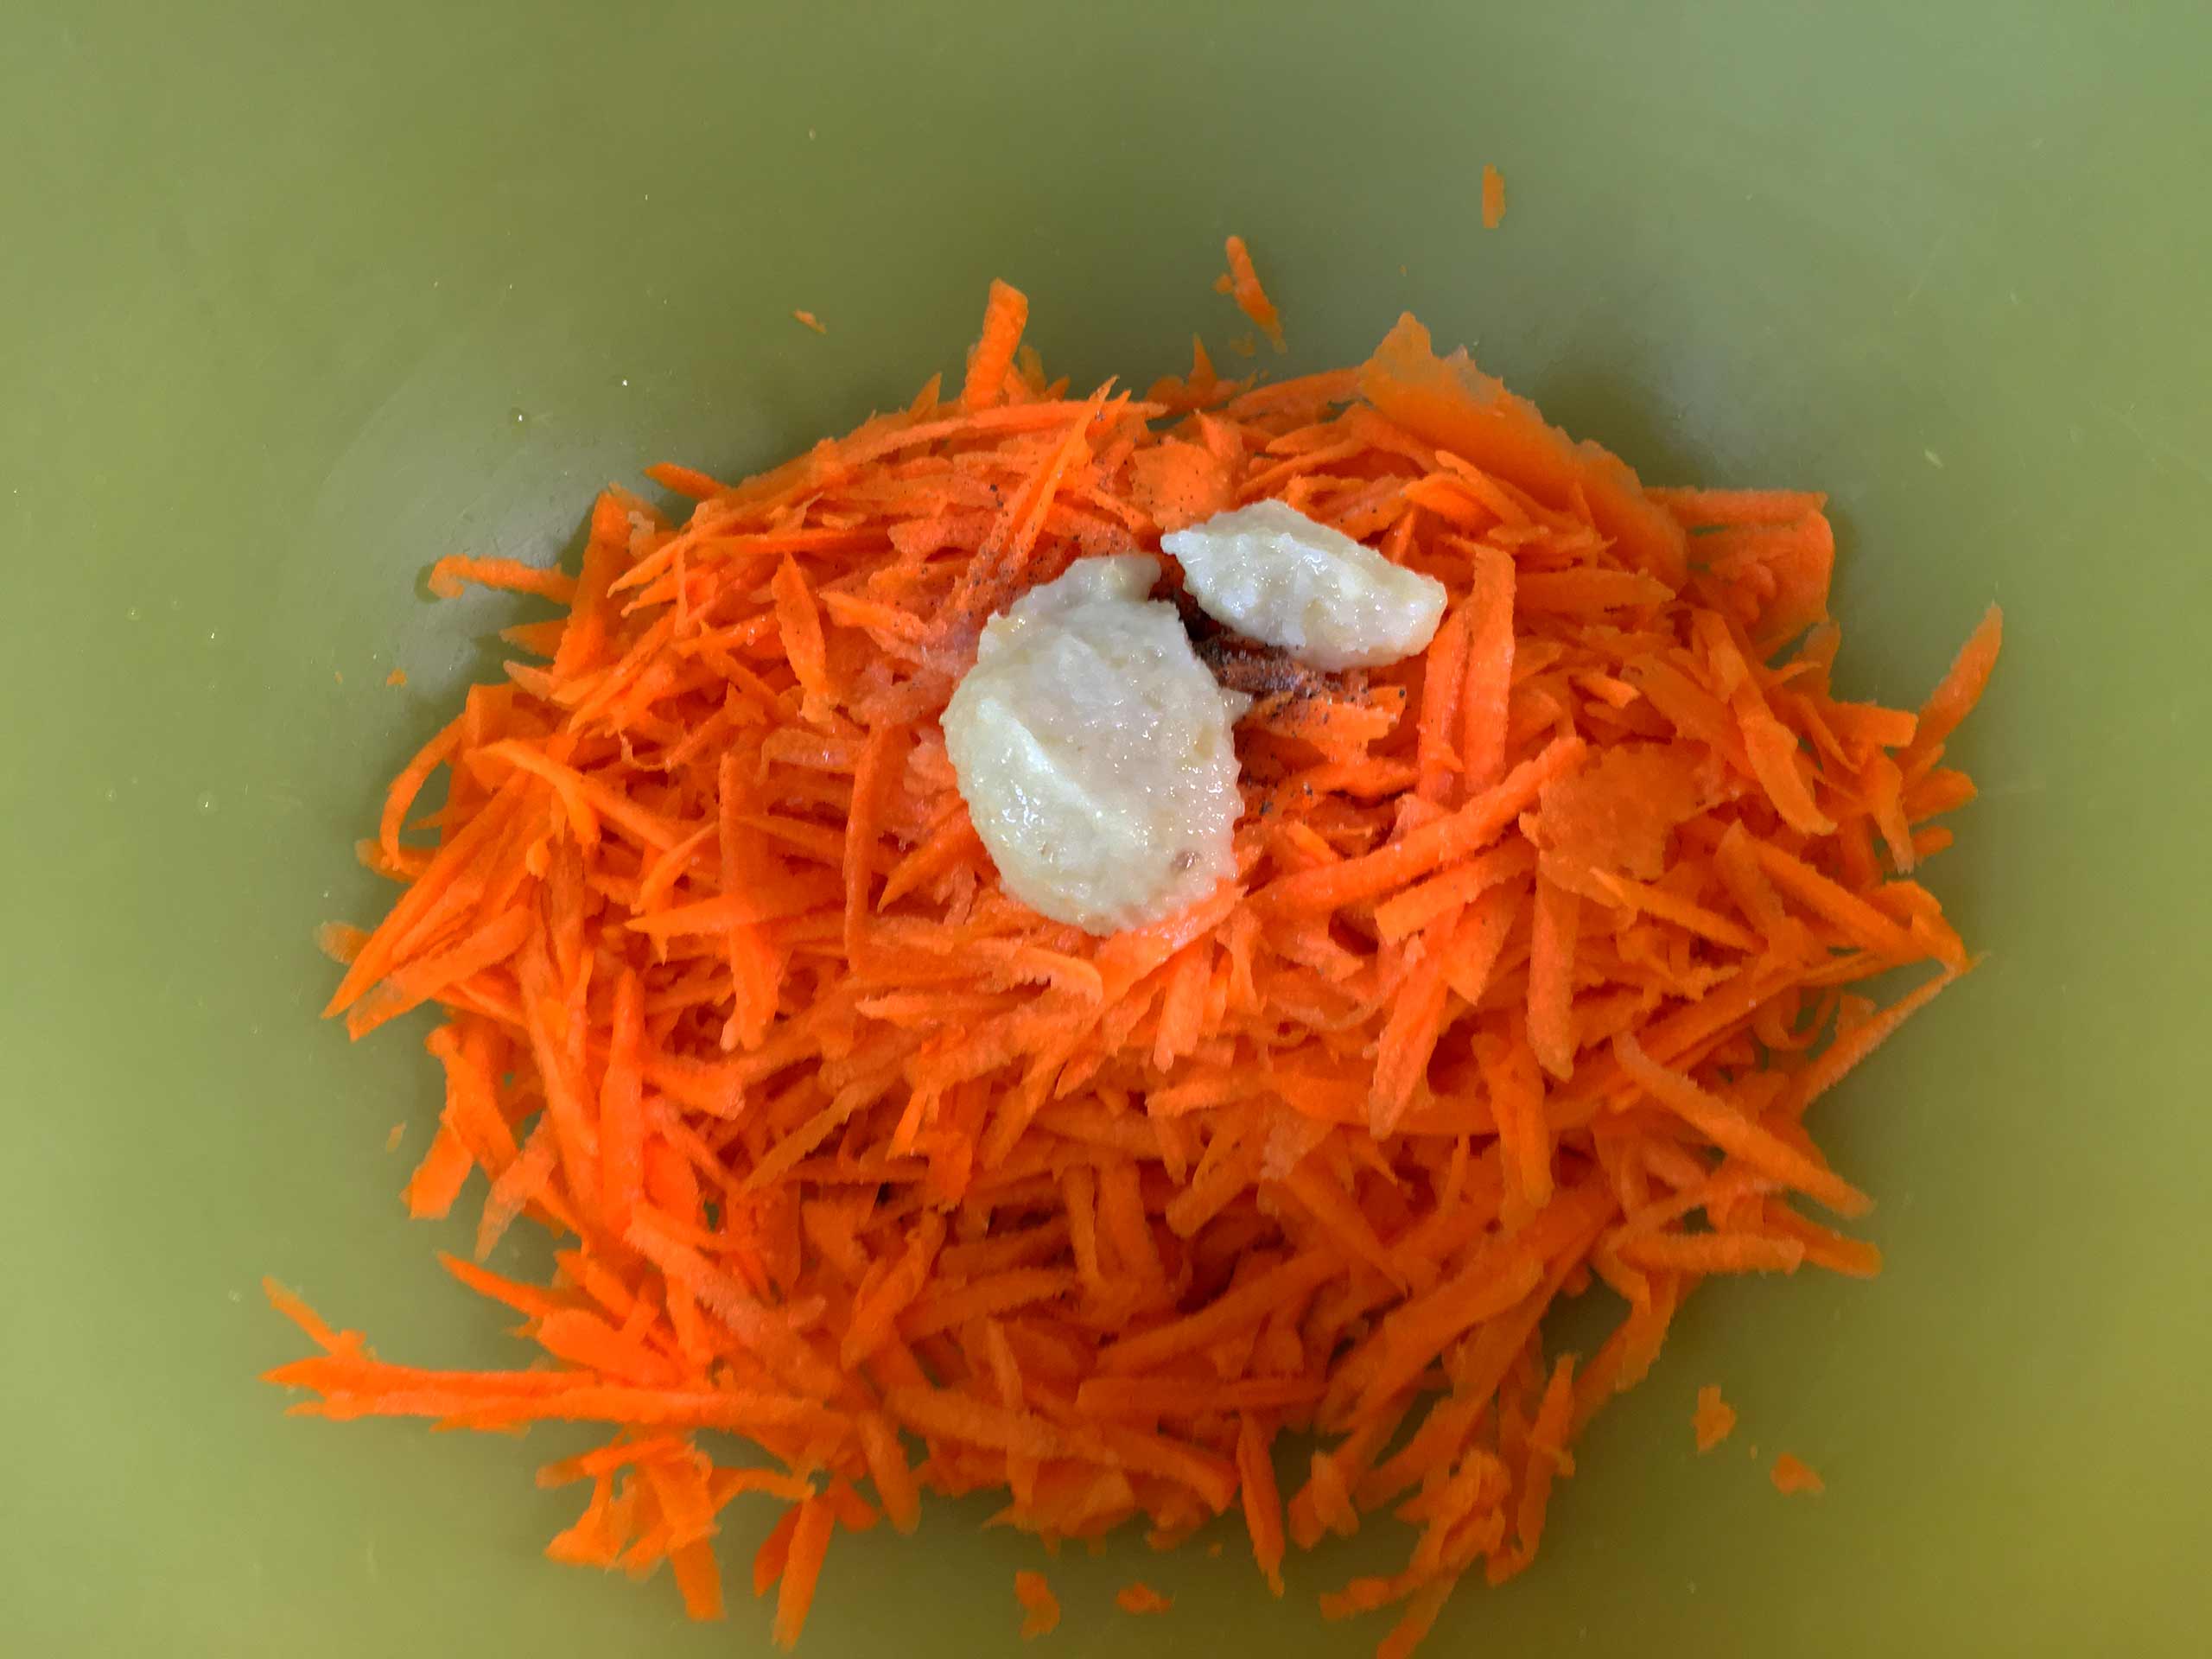 Atomic carrot and garlic salad